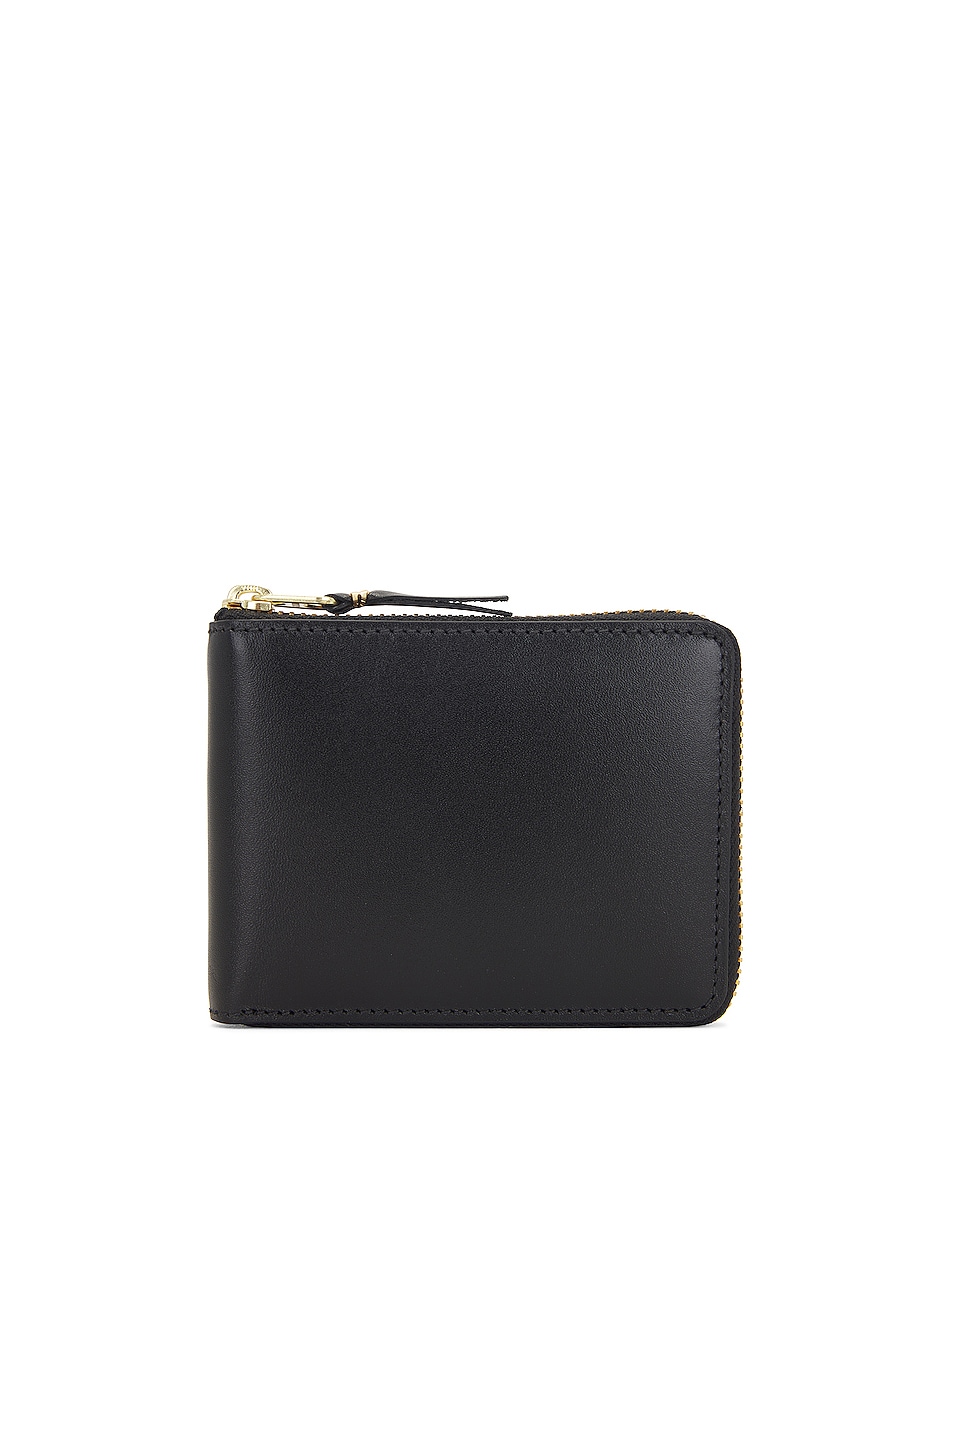 Classic Leather Zip Wallet in Black